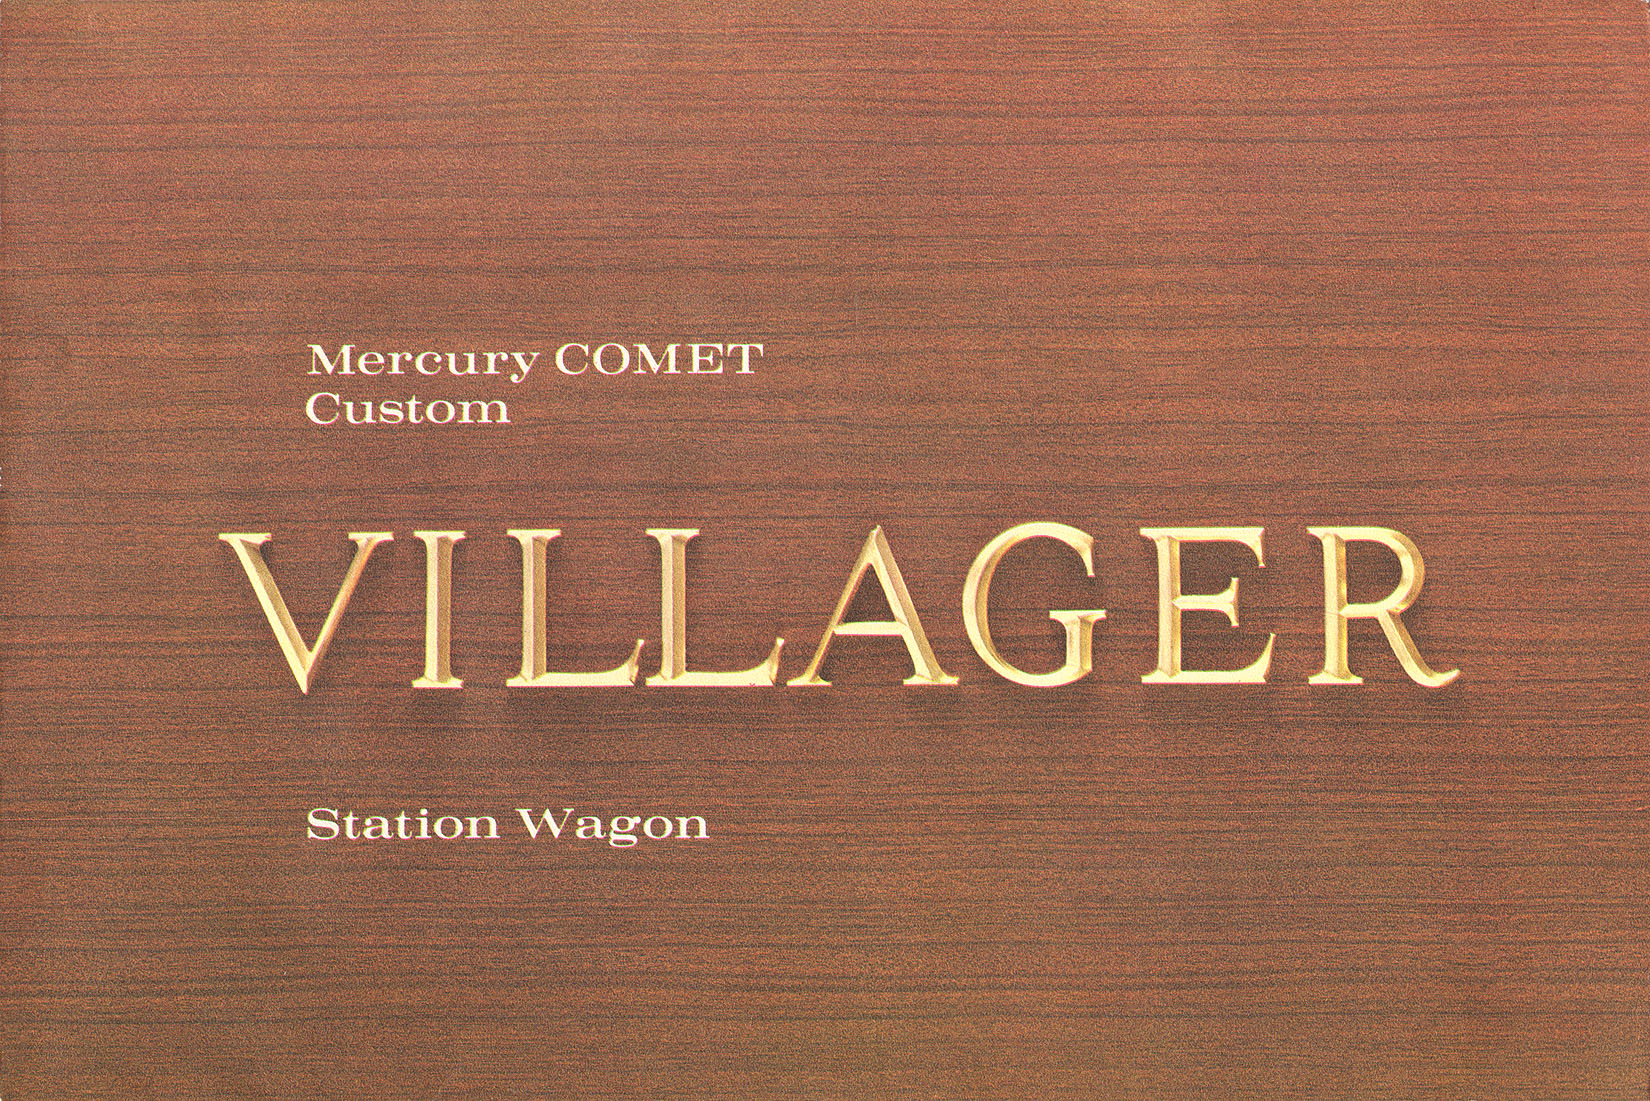 1962_Mercury_Comet_Villager_Wagon-01